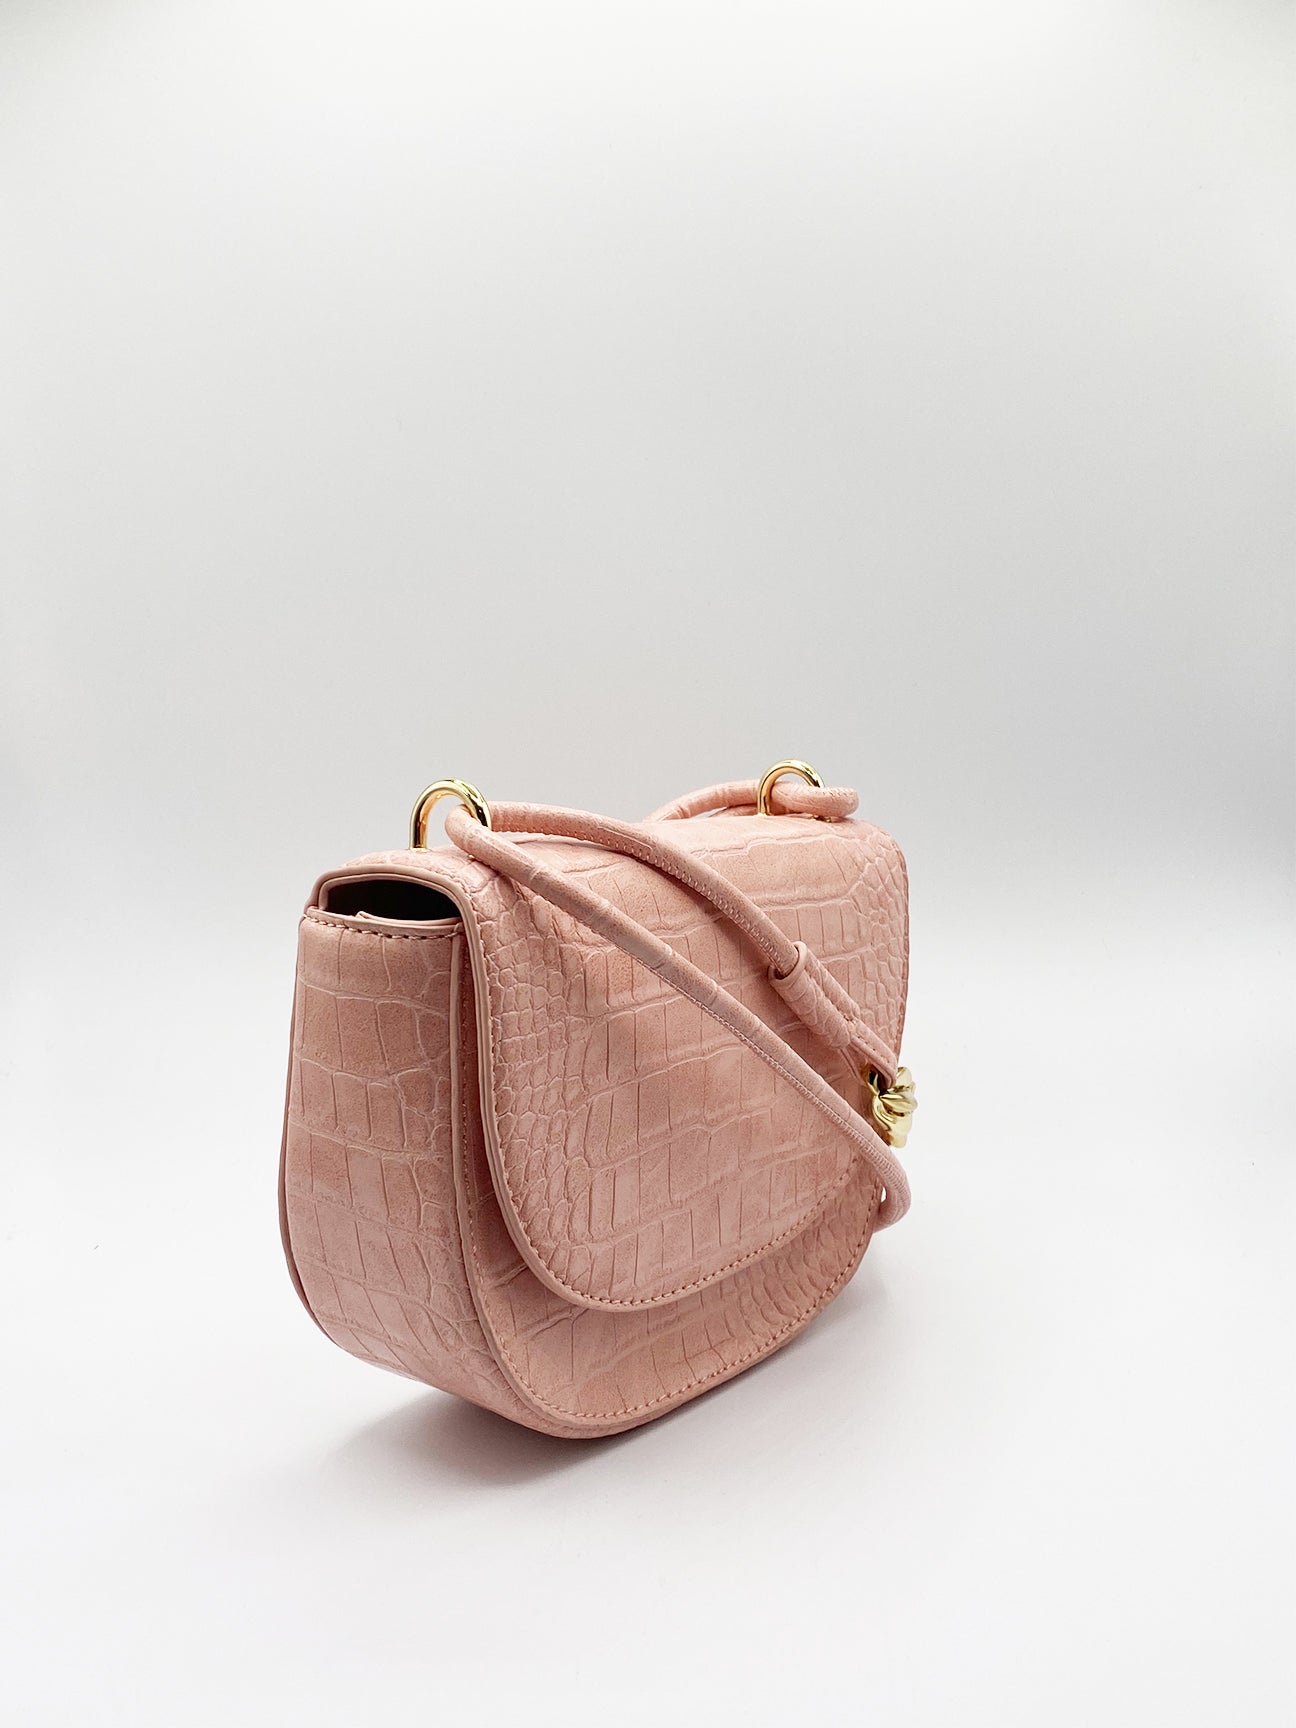 SVNX Micah Oval Shoulder Bag with Chain Detailing in Pale Pink